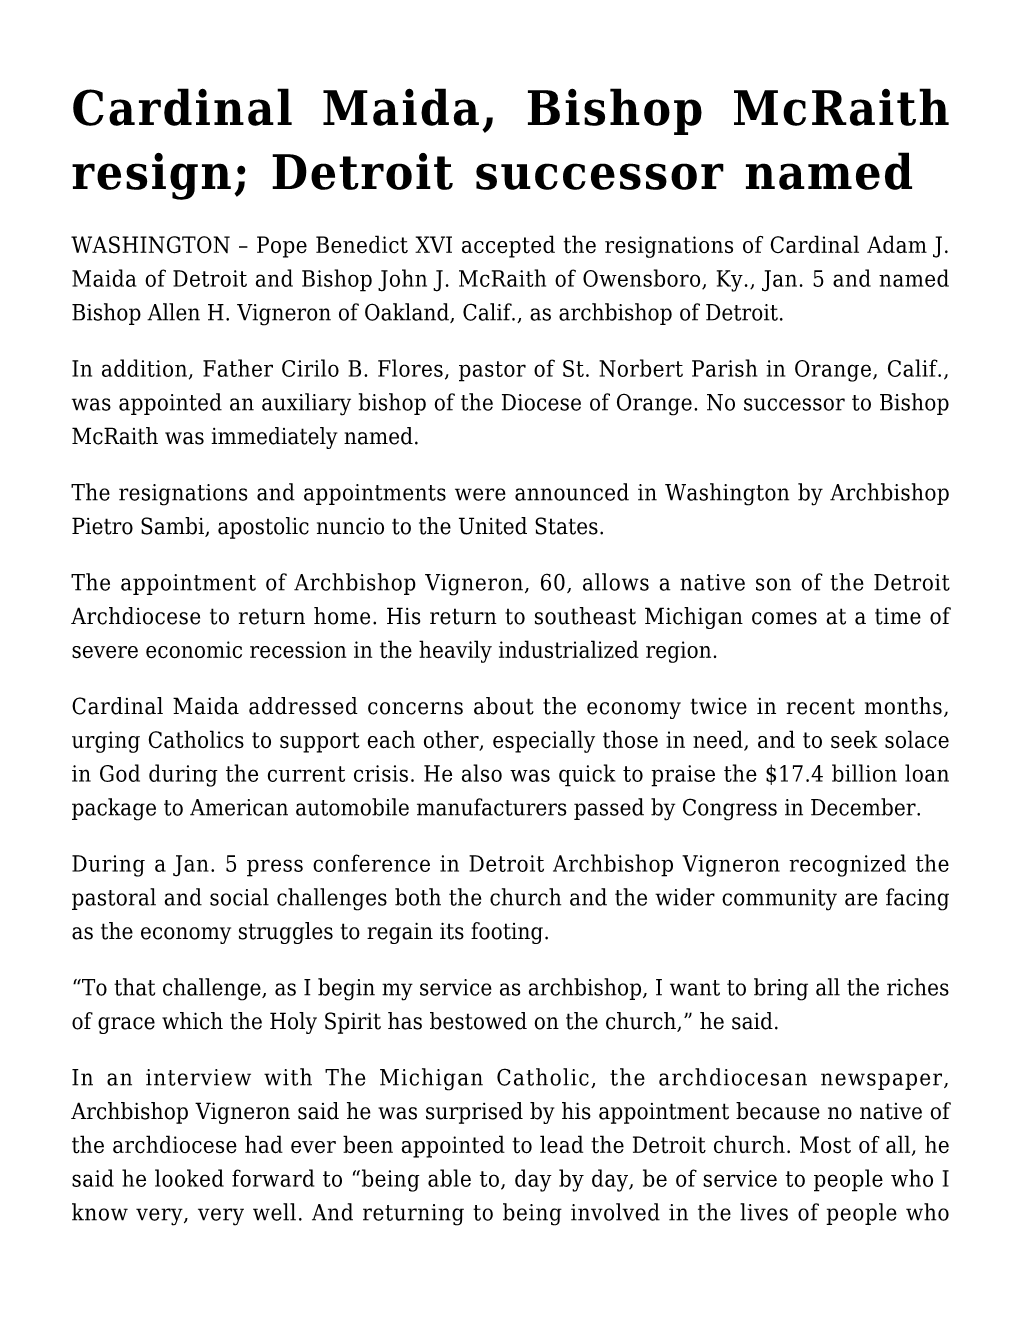 Cardinal Maida, Bishop Mcraith Resign; Detroit Successor Named